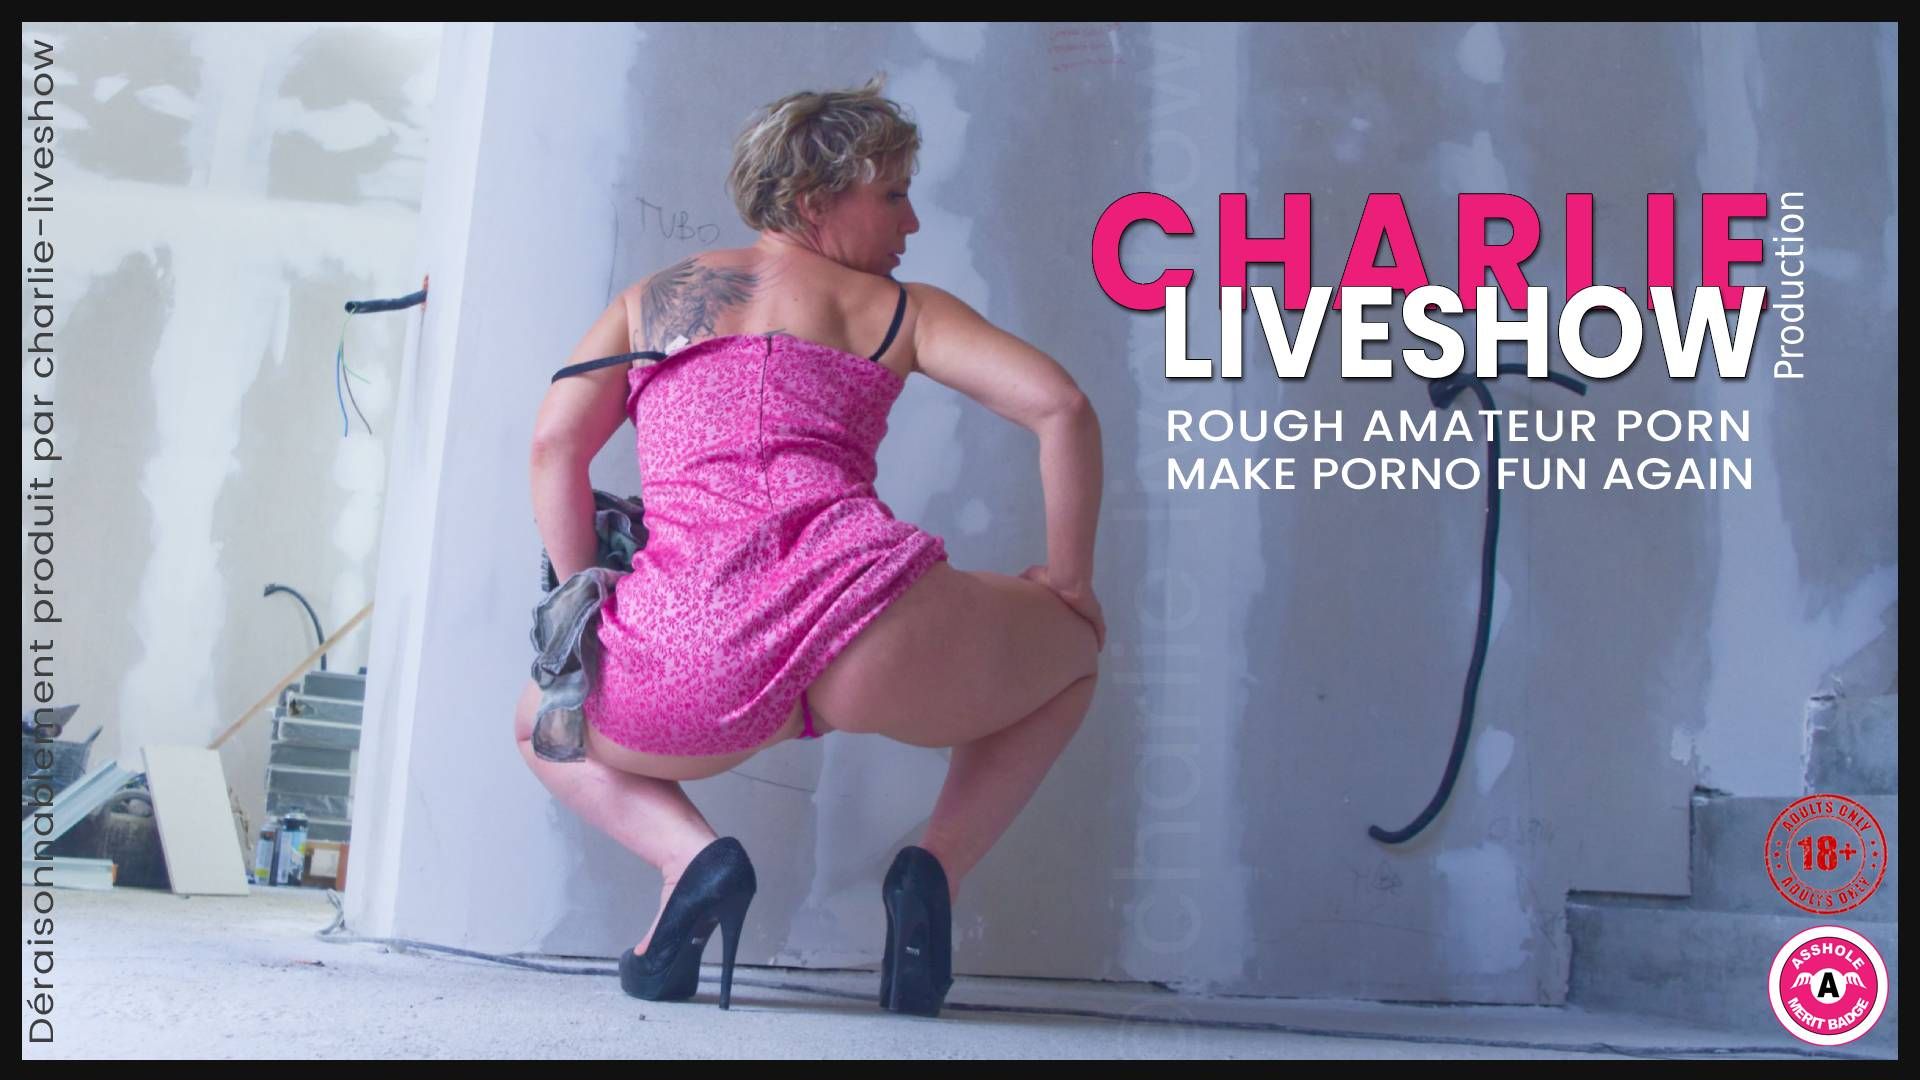 charlie-liveshow-porno-francaise-camgirl-test-sextoy